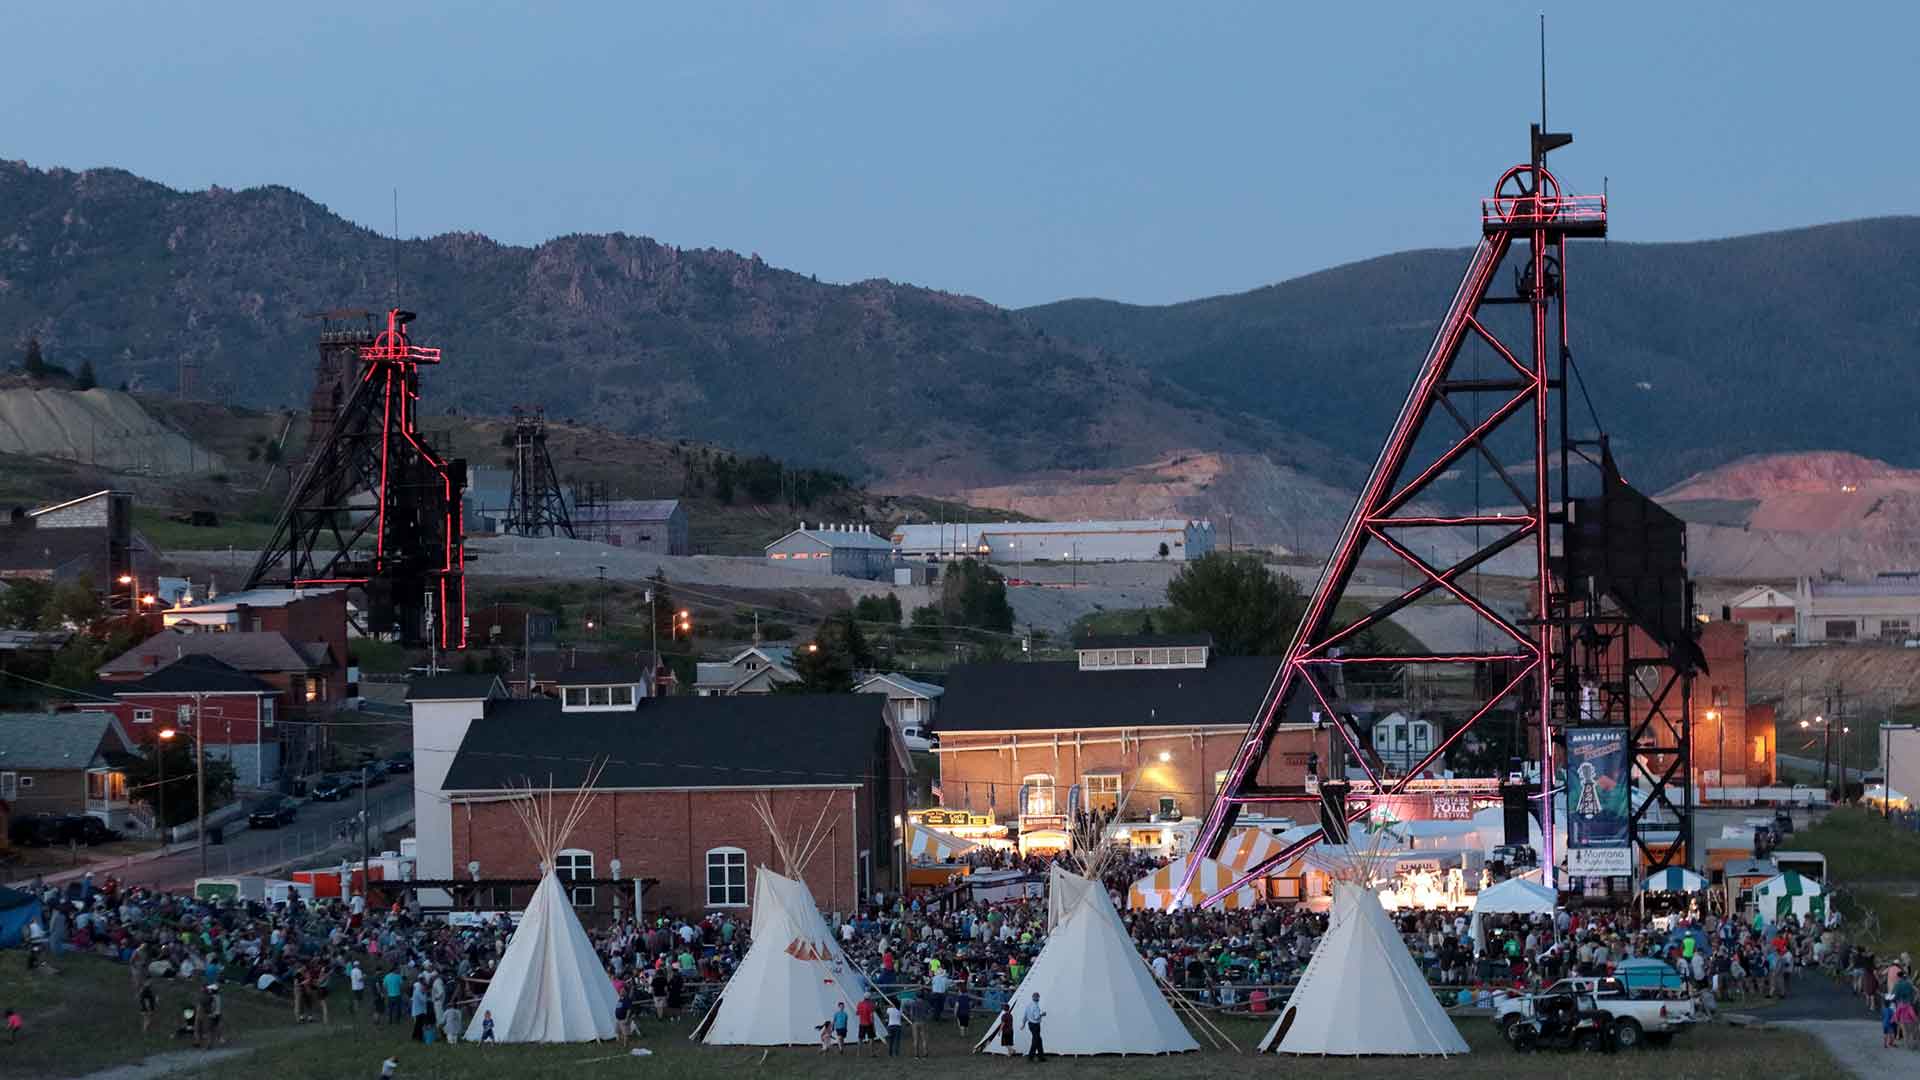 Montana Folk Festival A FREE Outdoor Music Festival In Butte, Montana